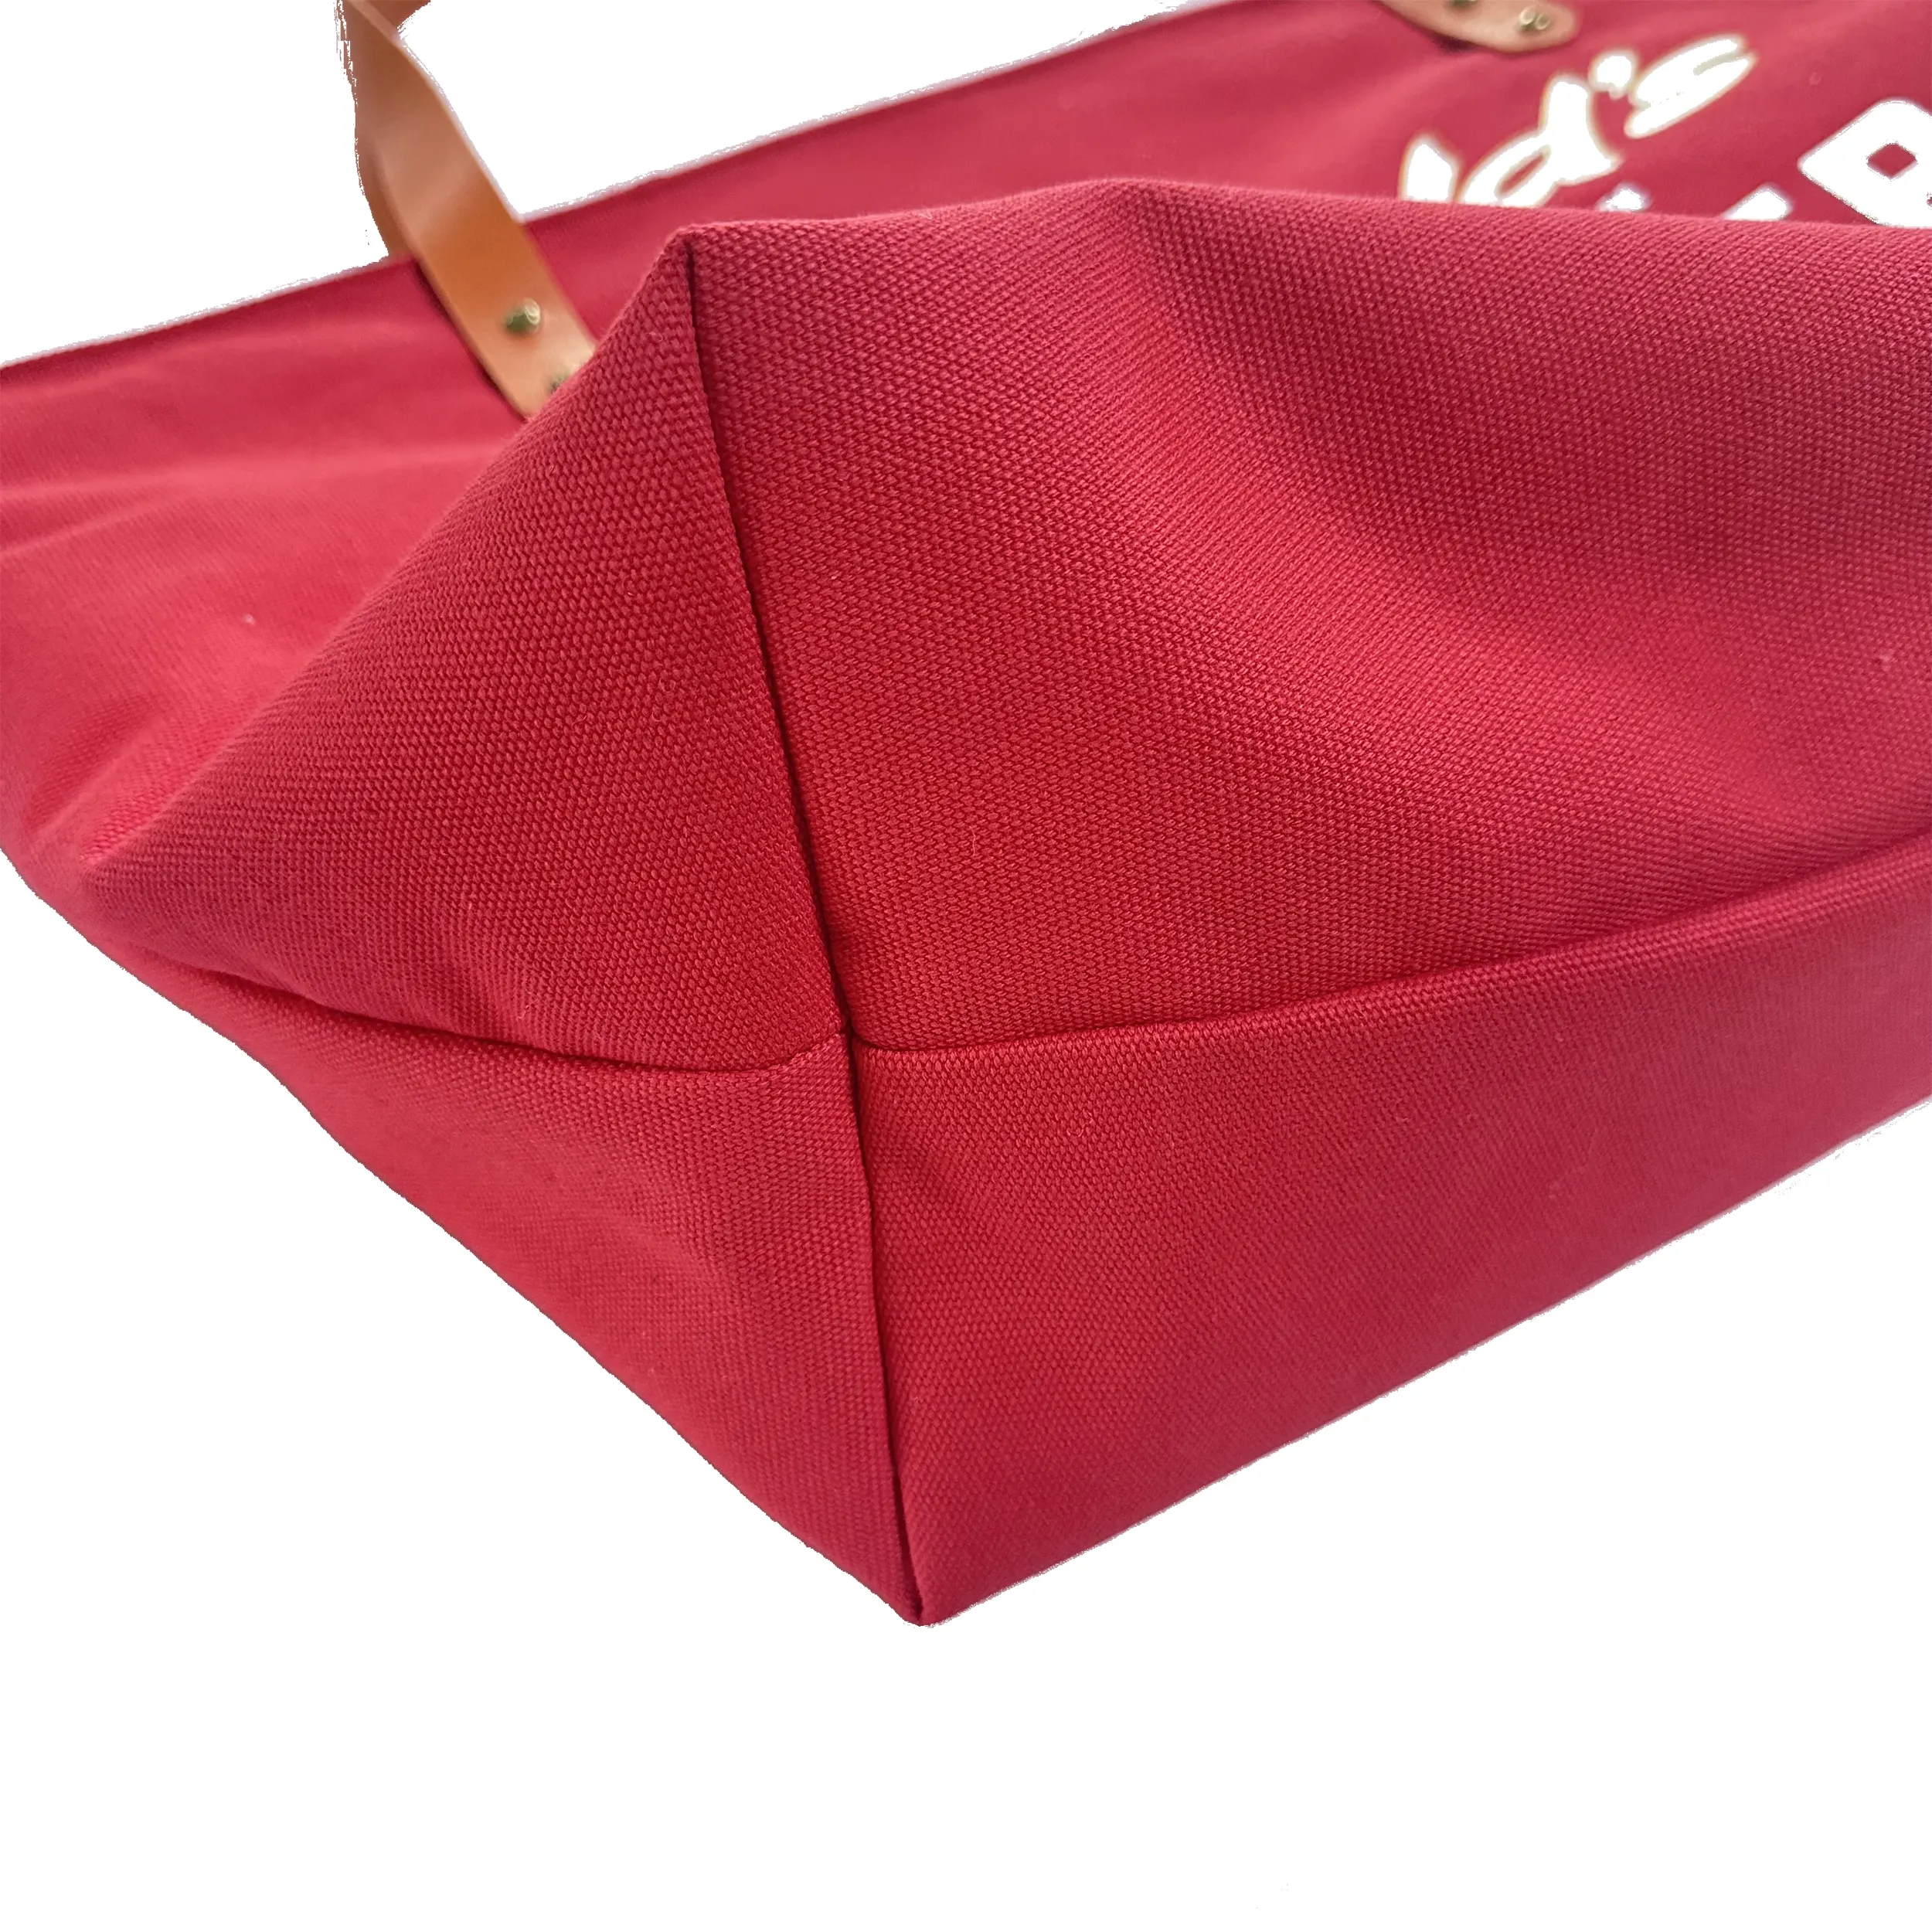 Bolsa de ombro reutilizável de moda personalizada, bolsa de armazenamento promocional de compras de grande capacidade para mulheres